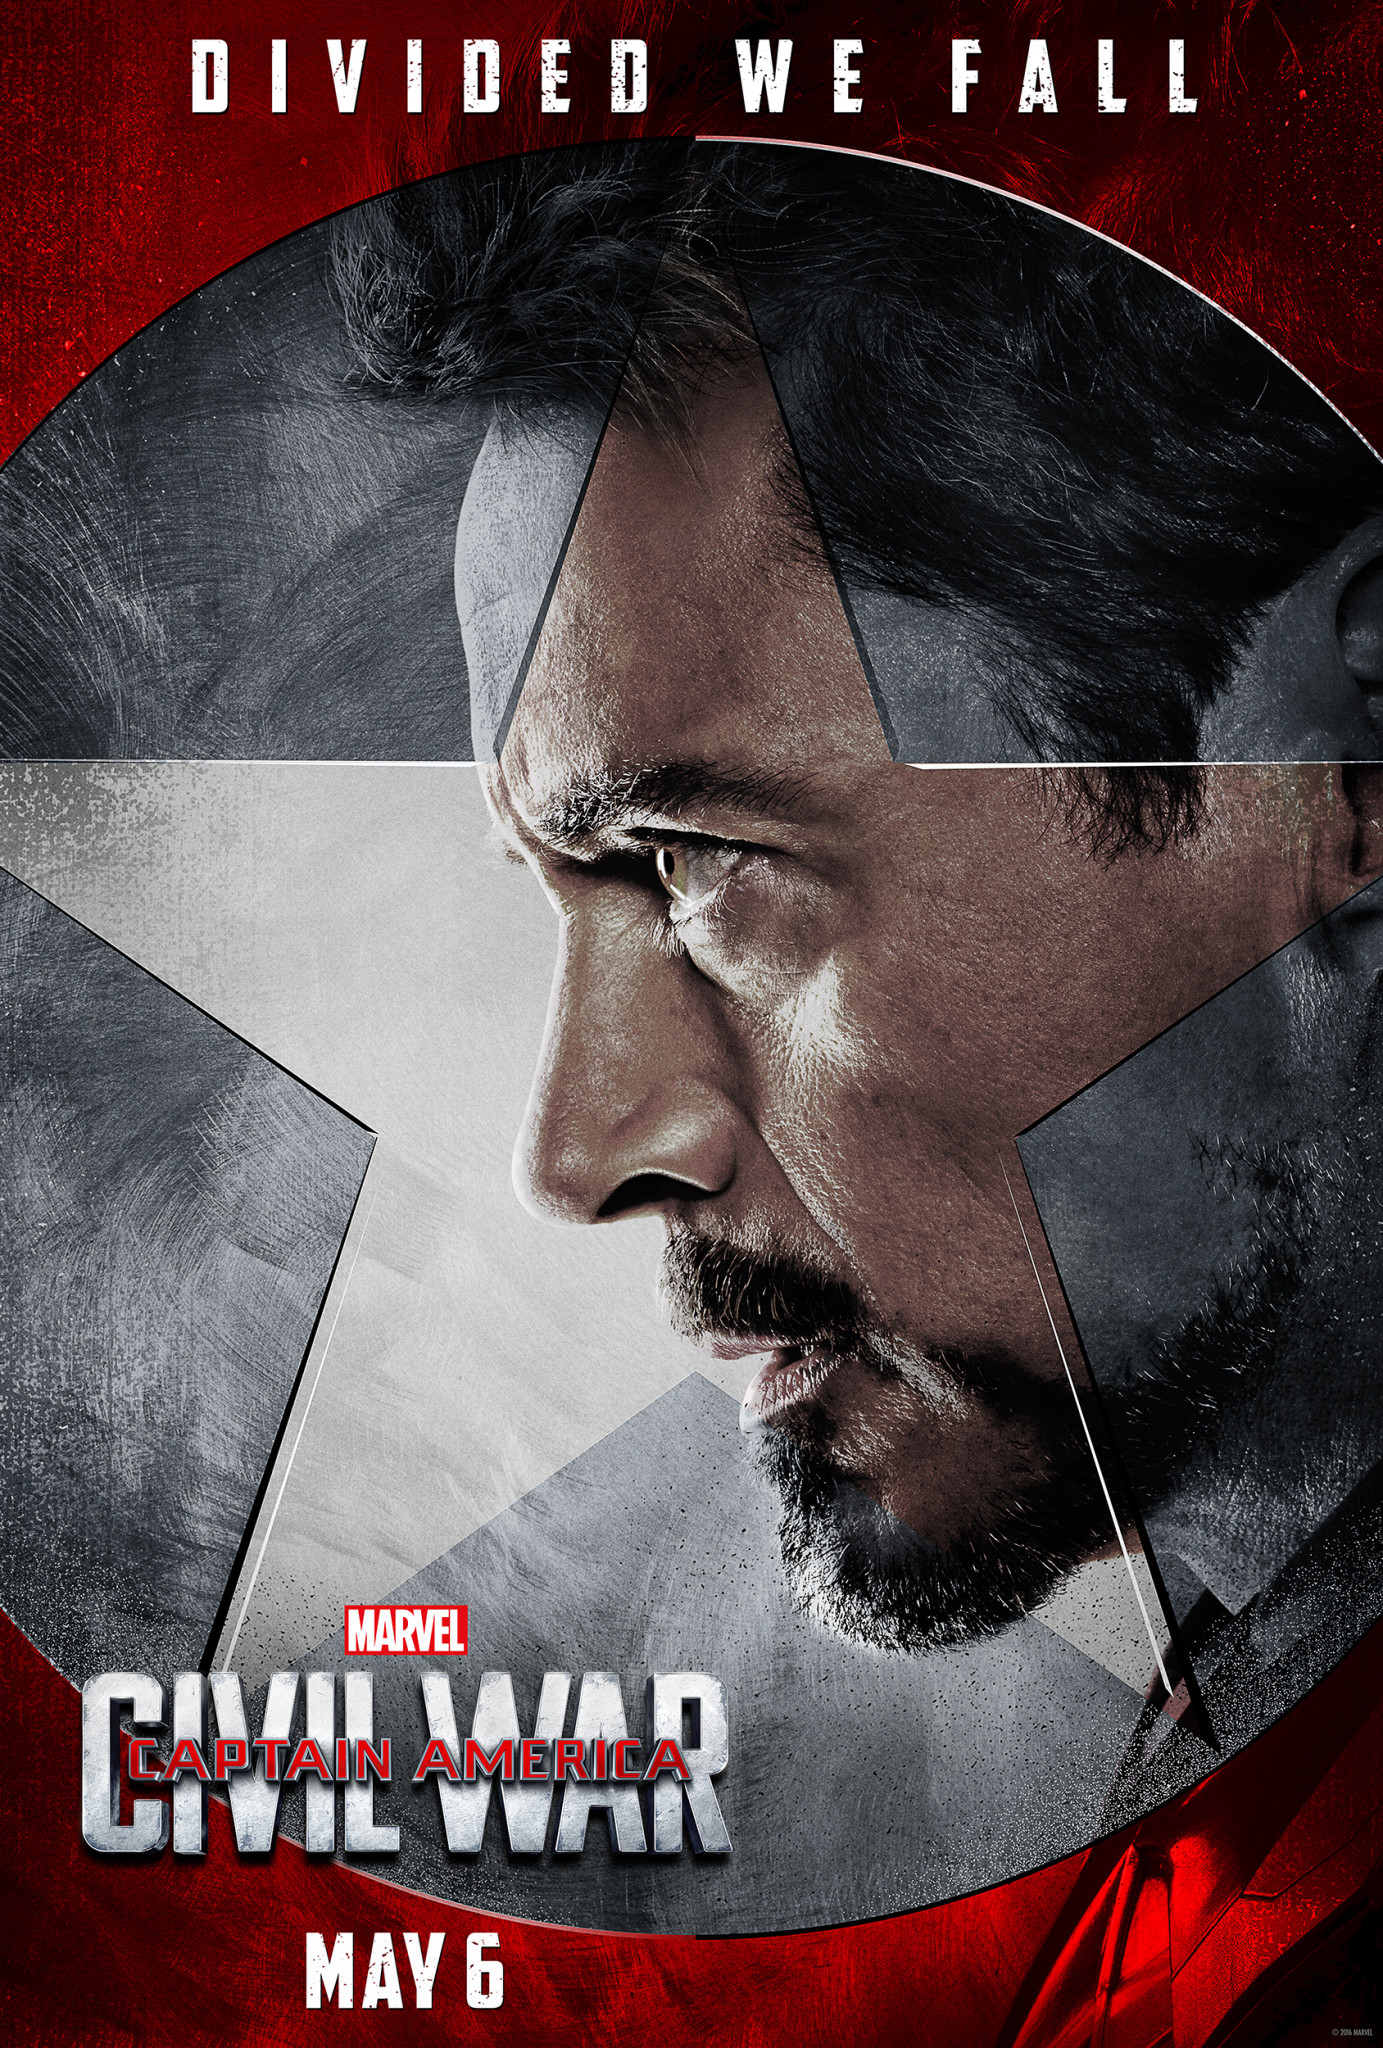 Team IronMan Posters For Marvel’s Captain America: Civil War